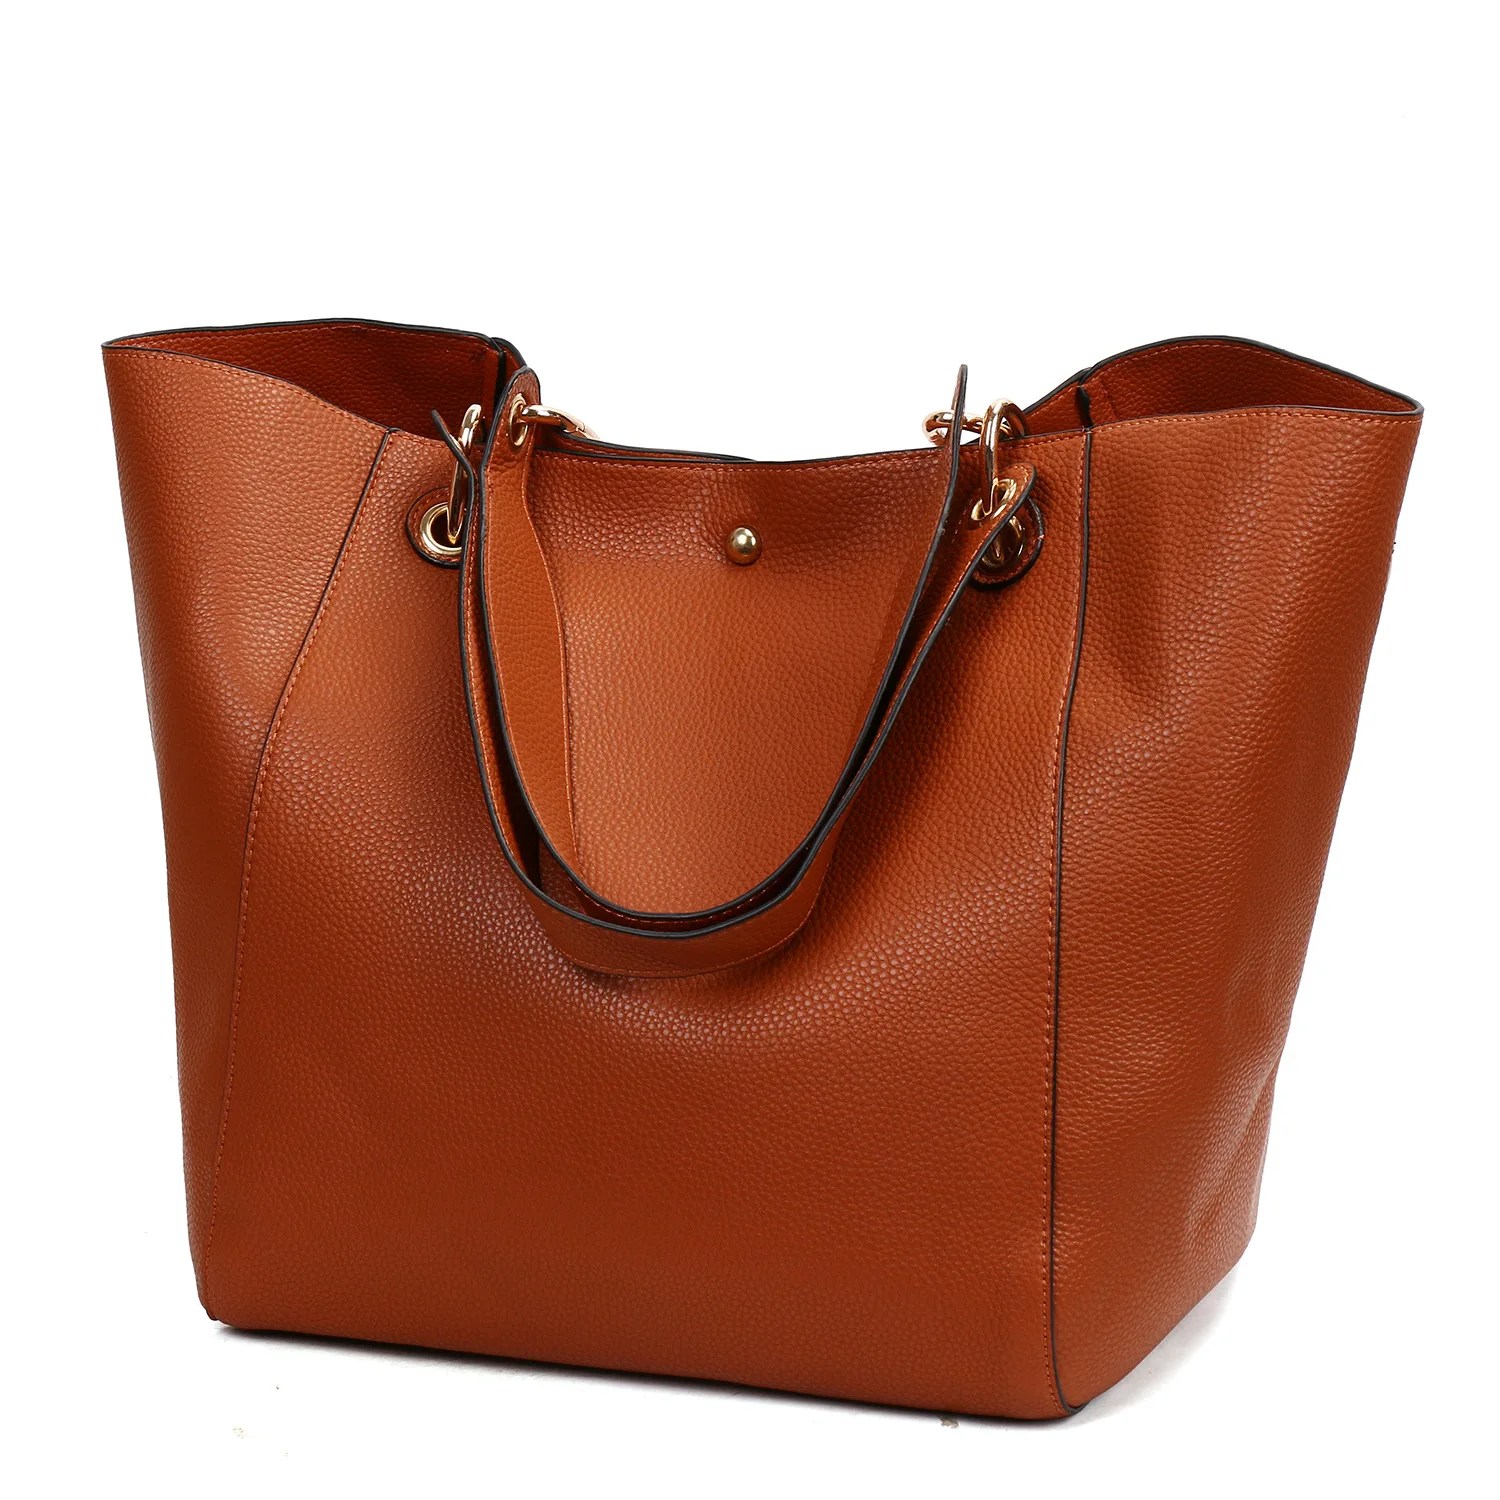 Luxury Leather Shoulder Bags for women 2021 Big Capacity Top-handle Totes Crossbody women Bag Large Purses and Handbags bolsa images - 6